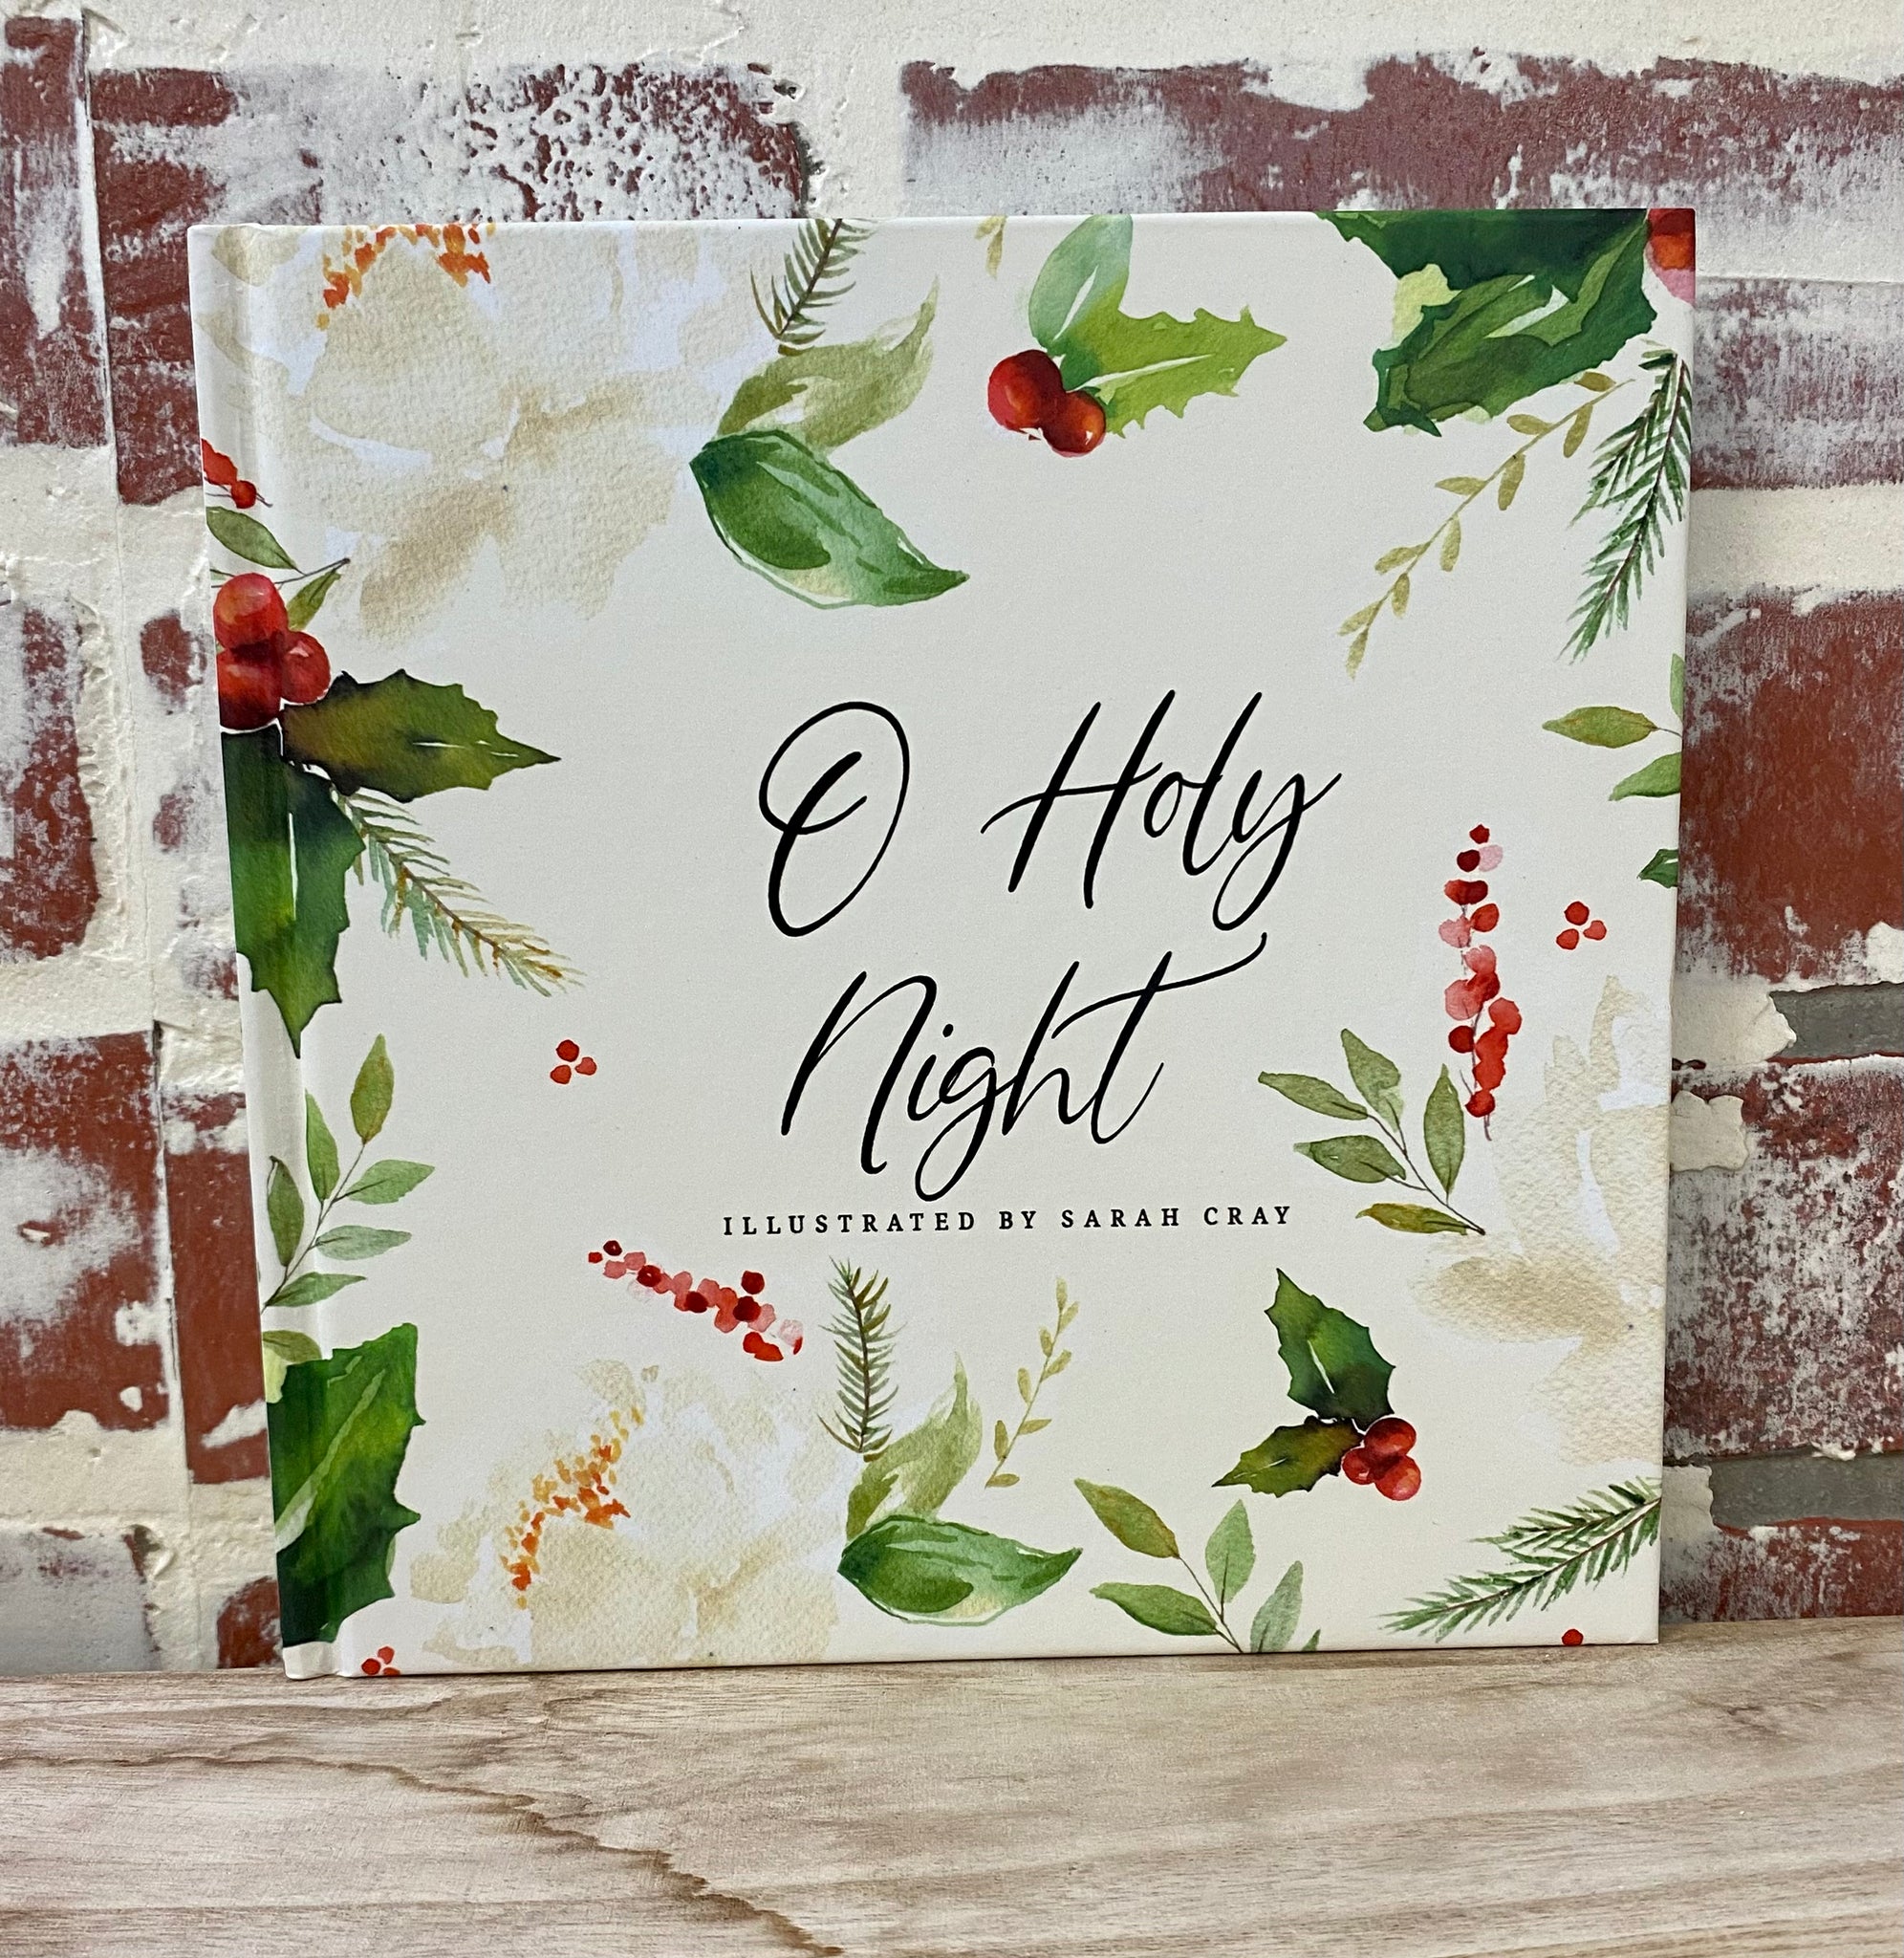 O Holy Night Children’s Book